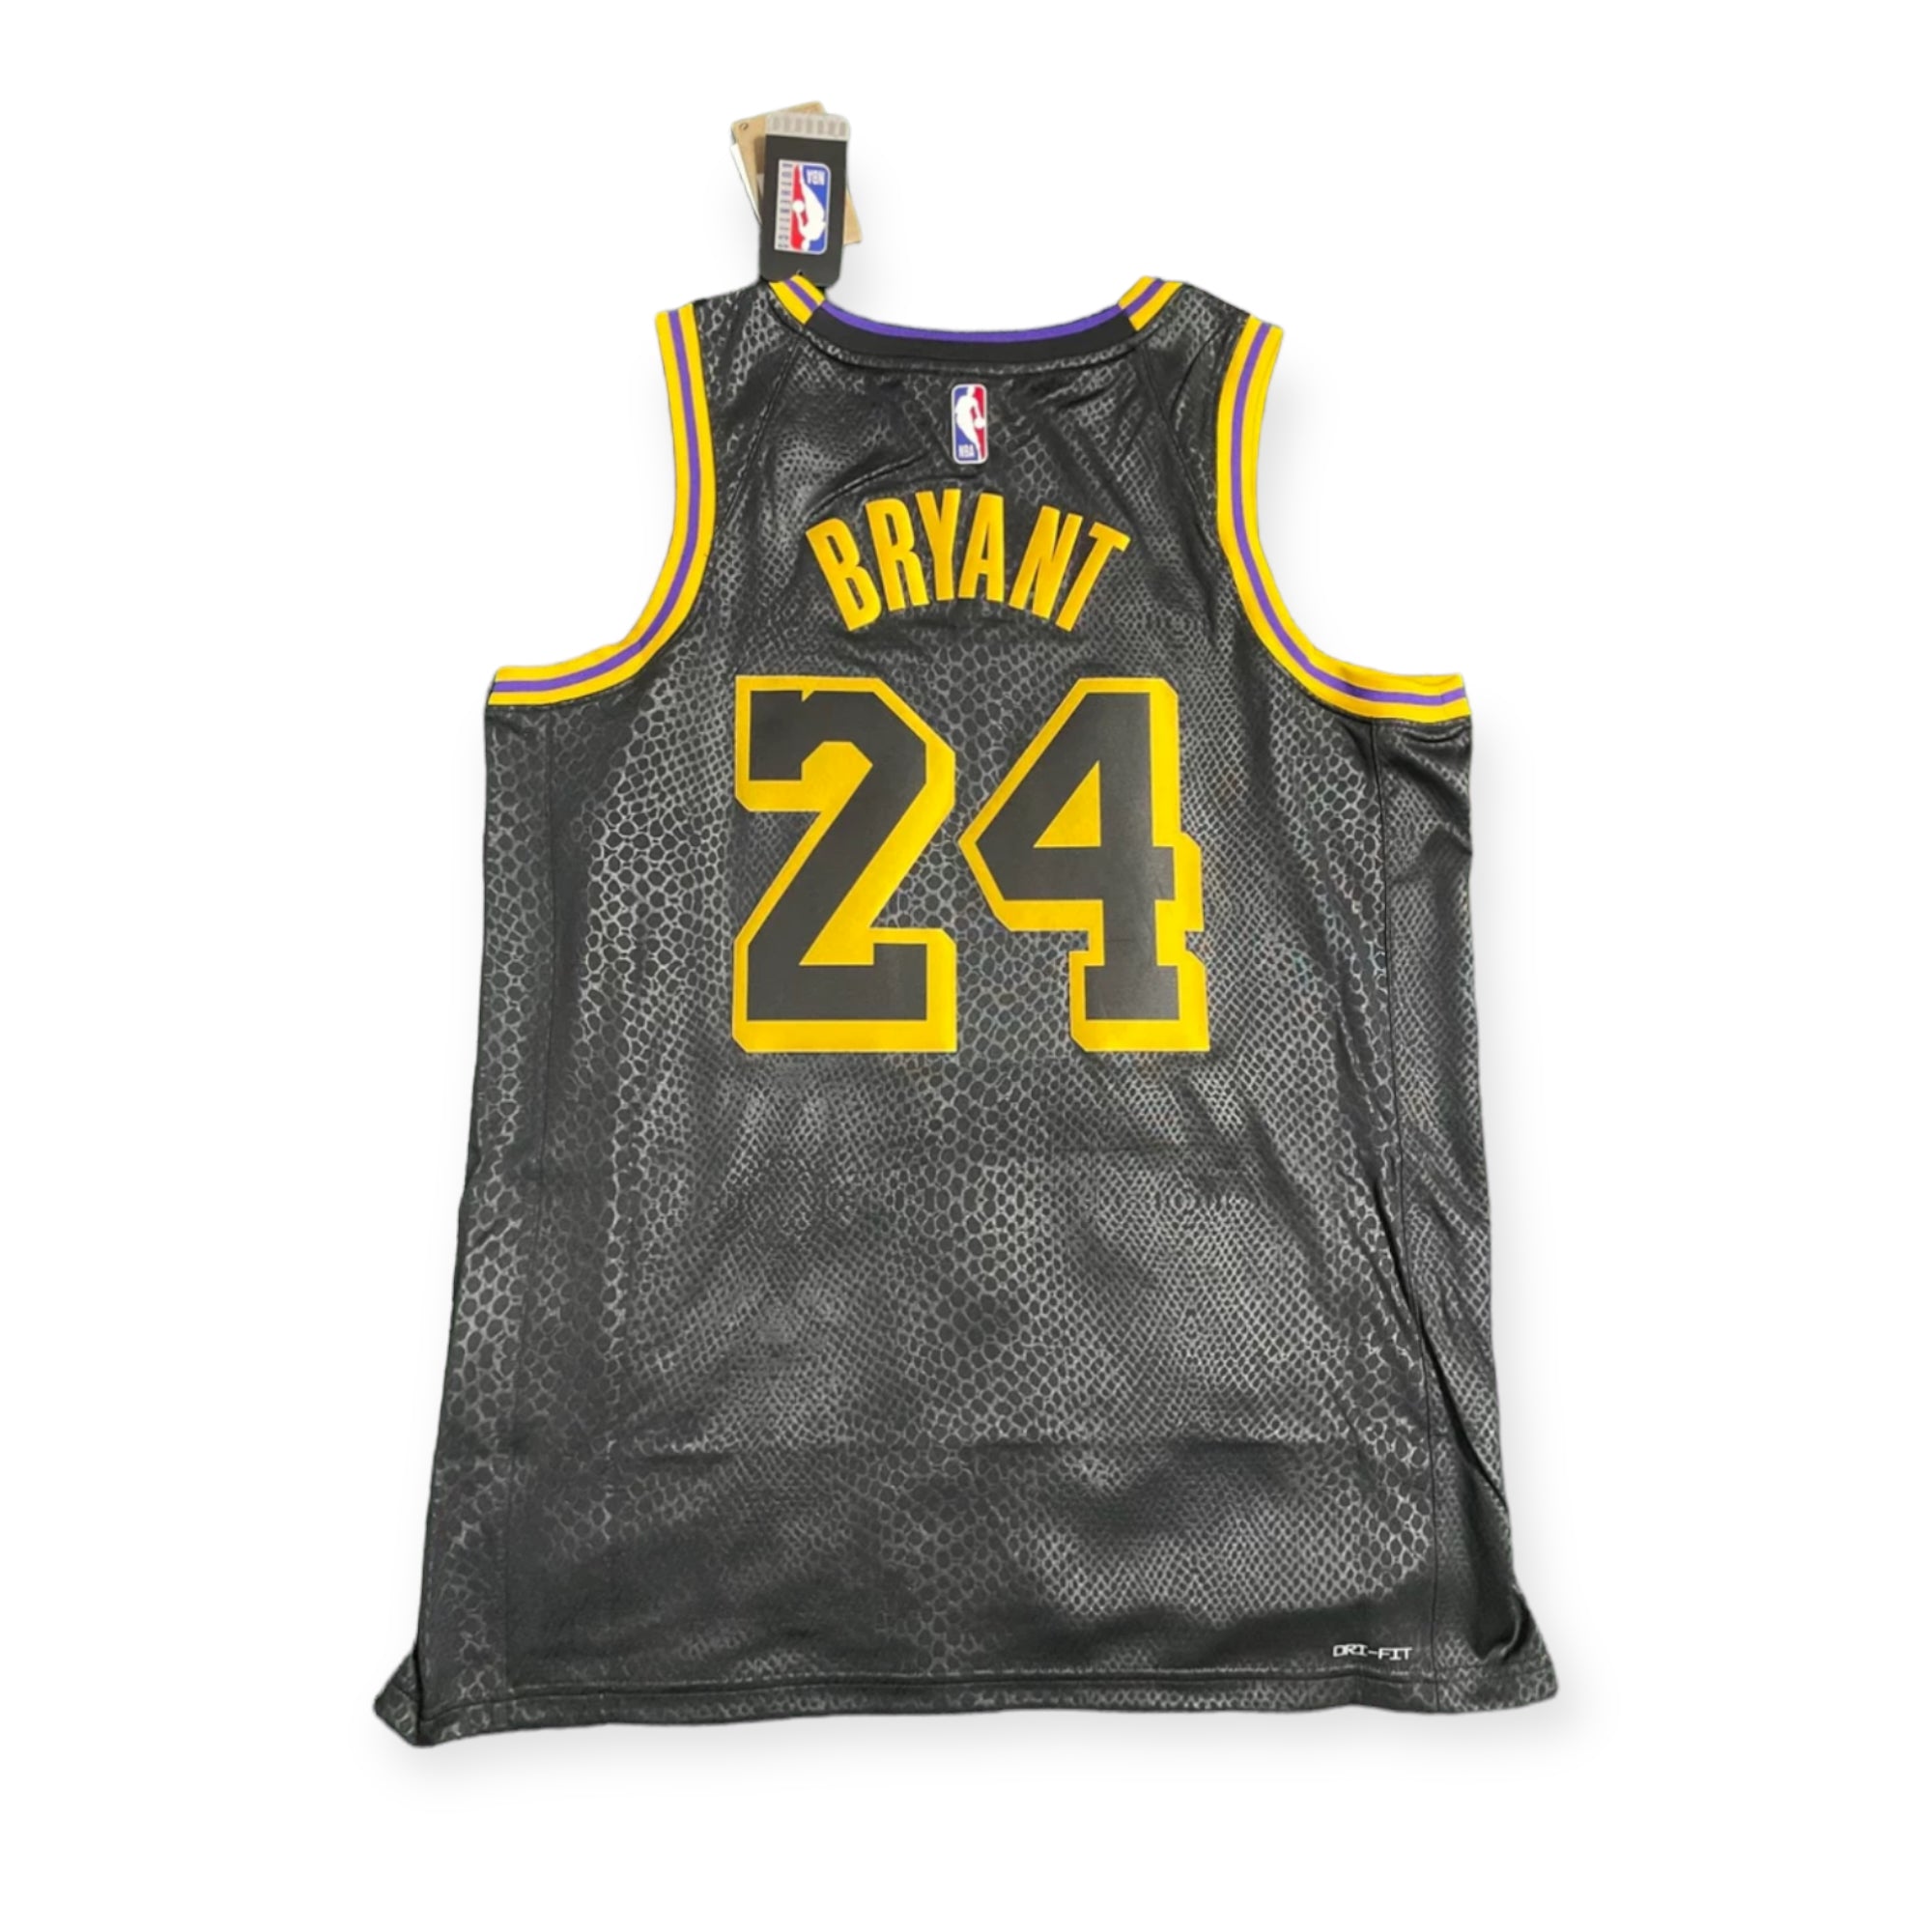 Kobe Bryant Los Angeles Lakers 8.24 "Mamba City Edition" Nike Swingman Men's Jersey - Black